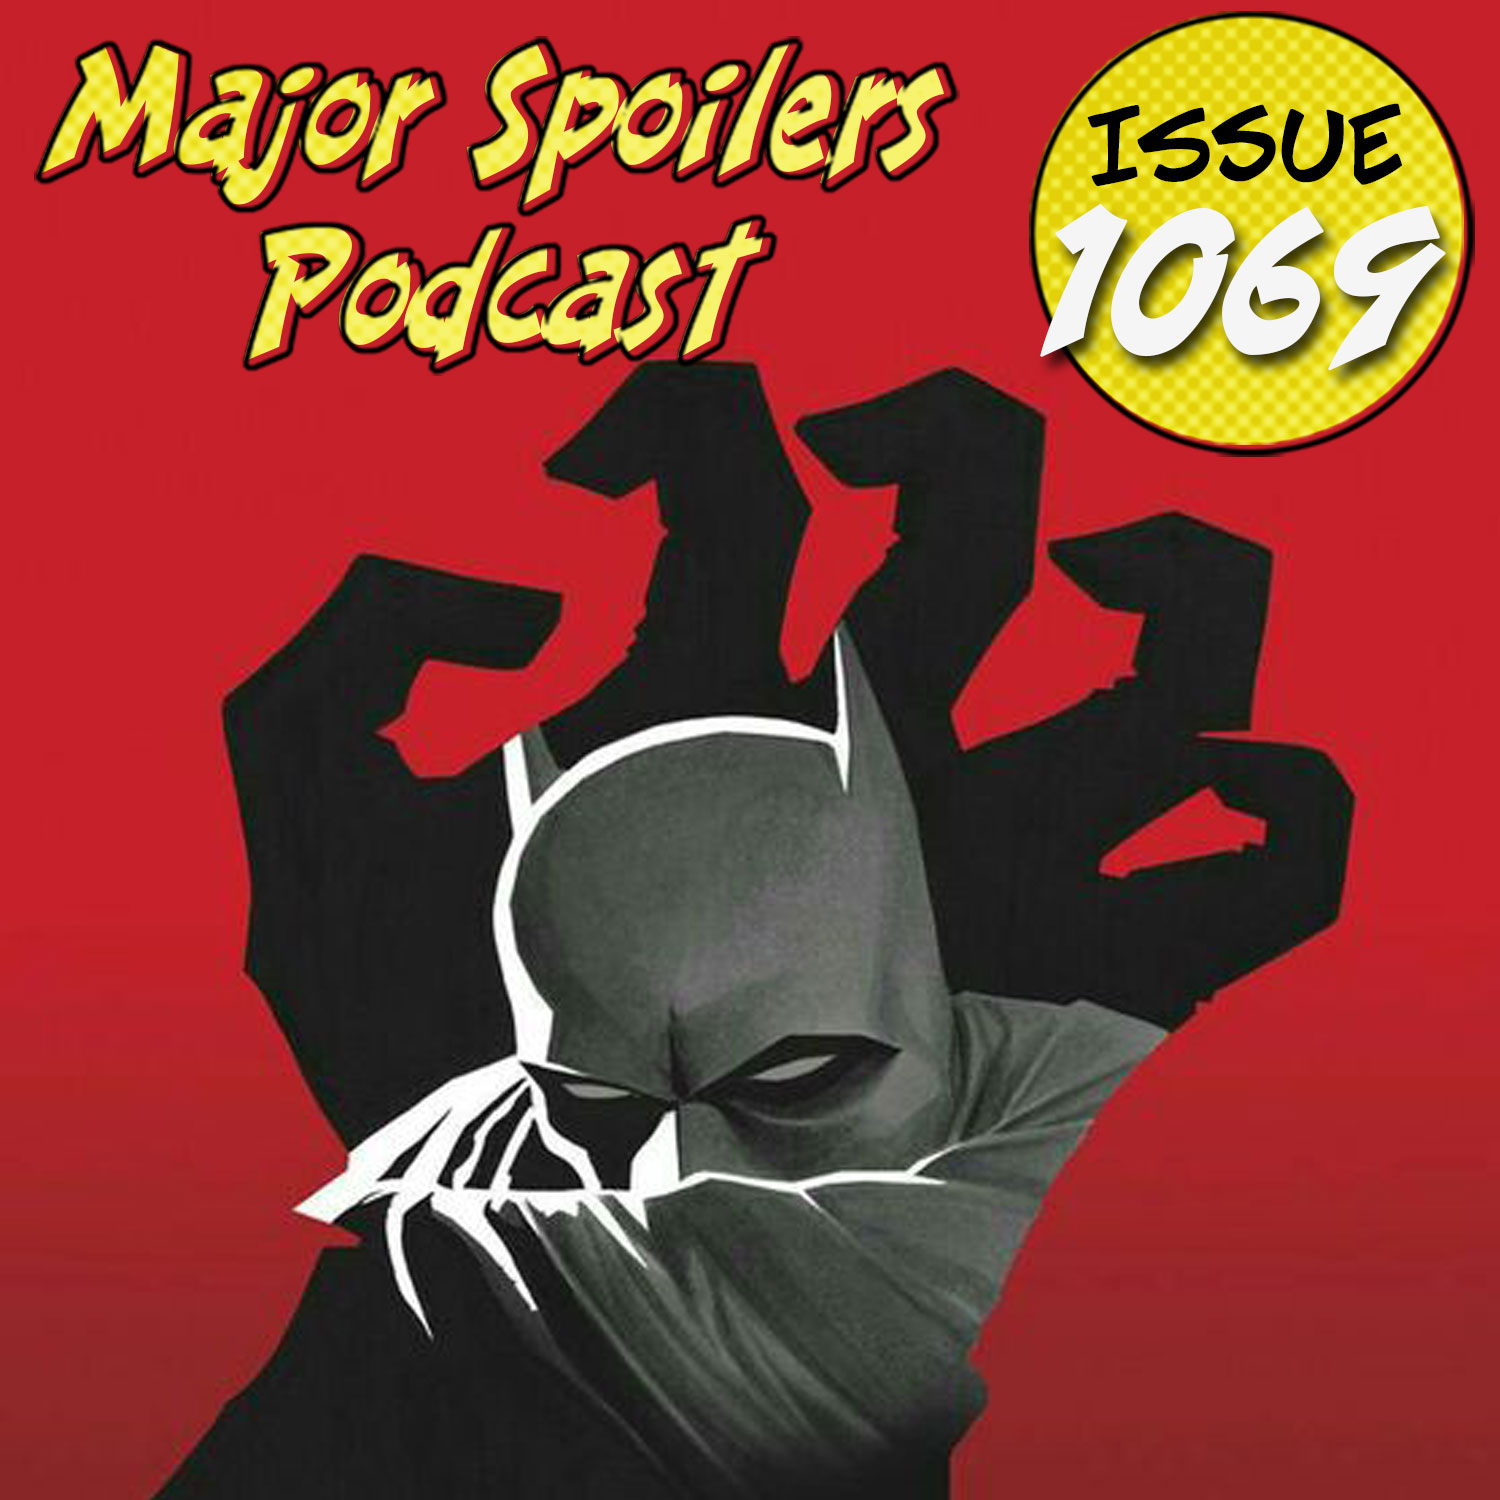 Major Spoilers Podcast #1069: The Black Glove Podcast